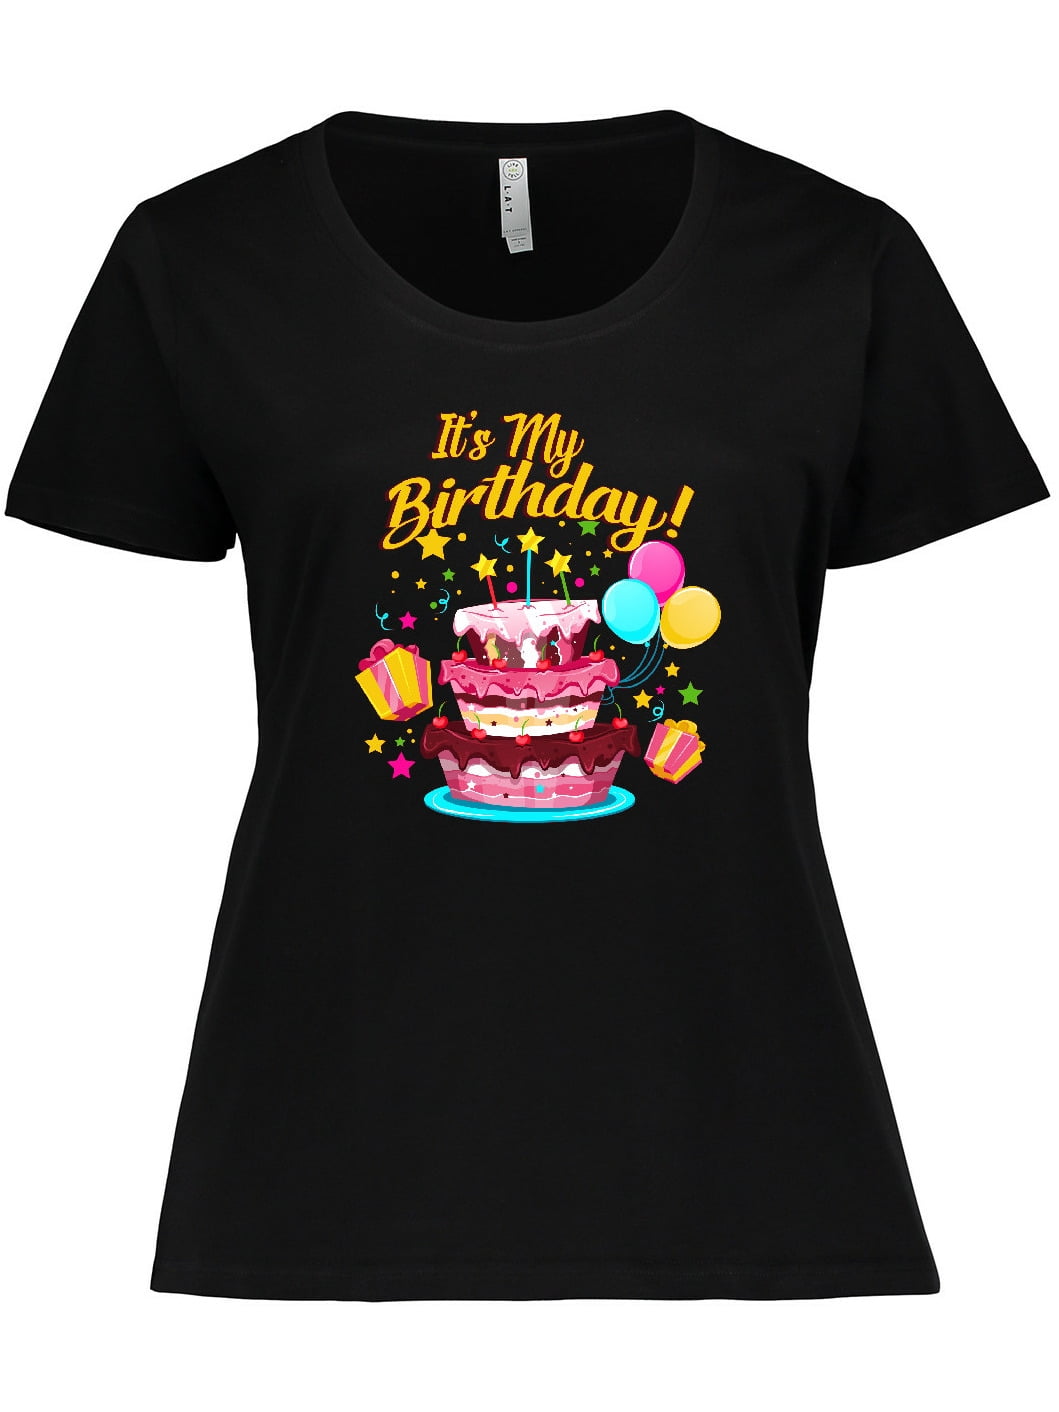 My Birthday Women's Plus Size T-Shirt ...